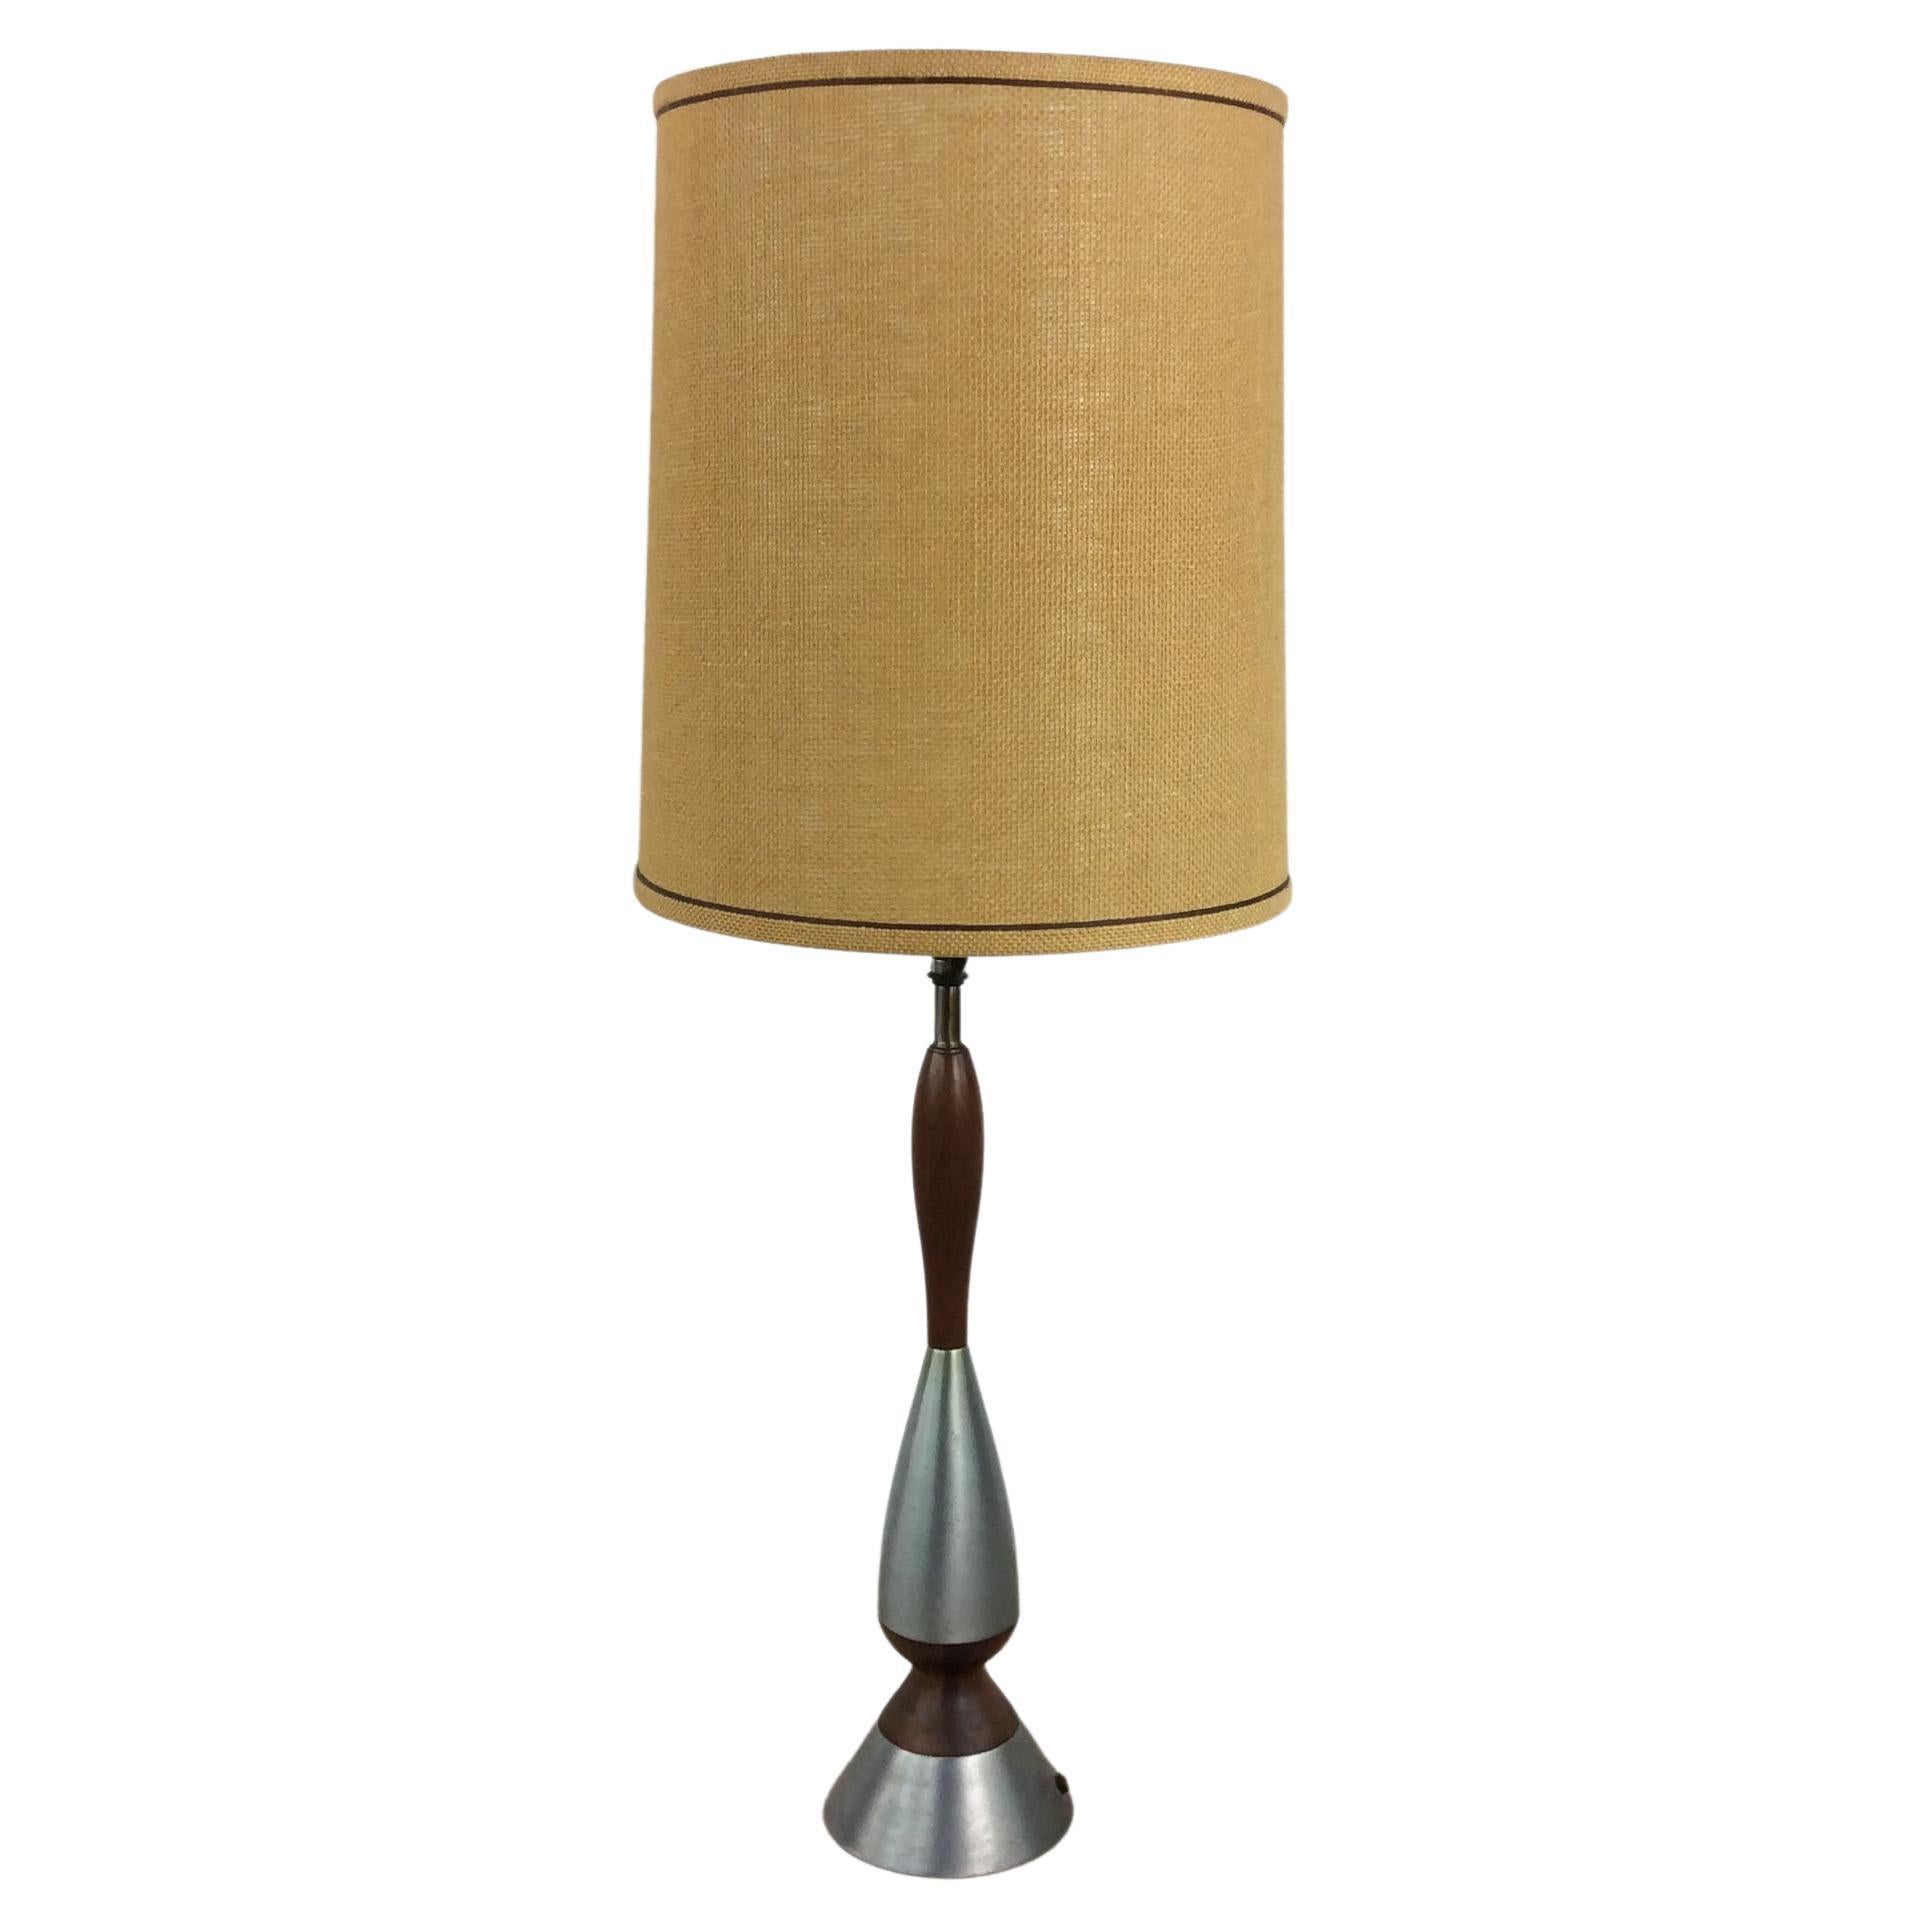 Mid Century Modern Walnut & Chrome Table Lamp with Barrel Shade